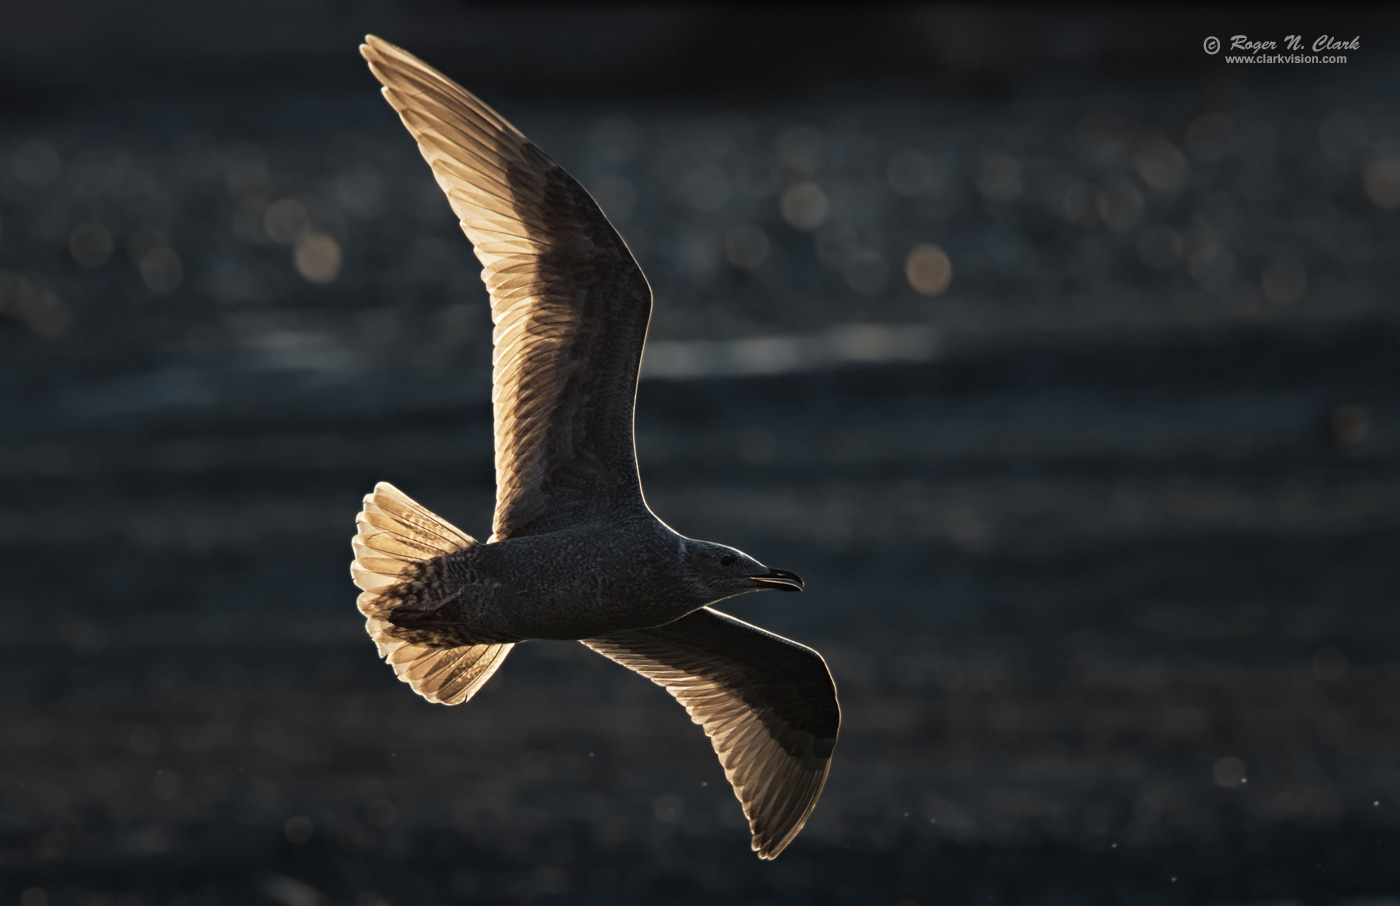 image gull-backlit.rnclark-c11-2019-IMG_4657-rth.b-1400s.jpg is Copyrighted by Roger N. Clark, www.clarkvision.com